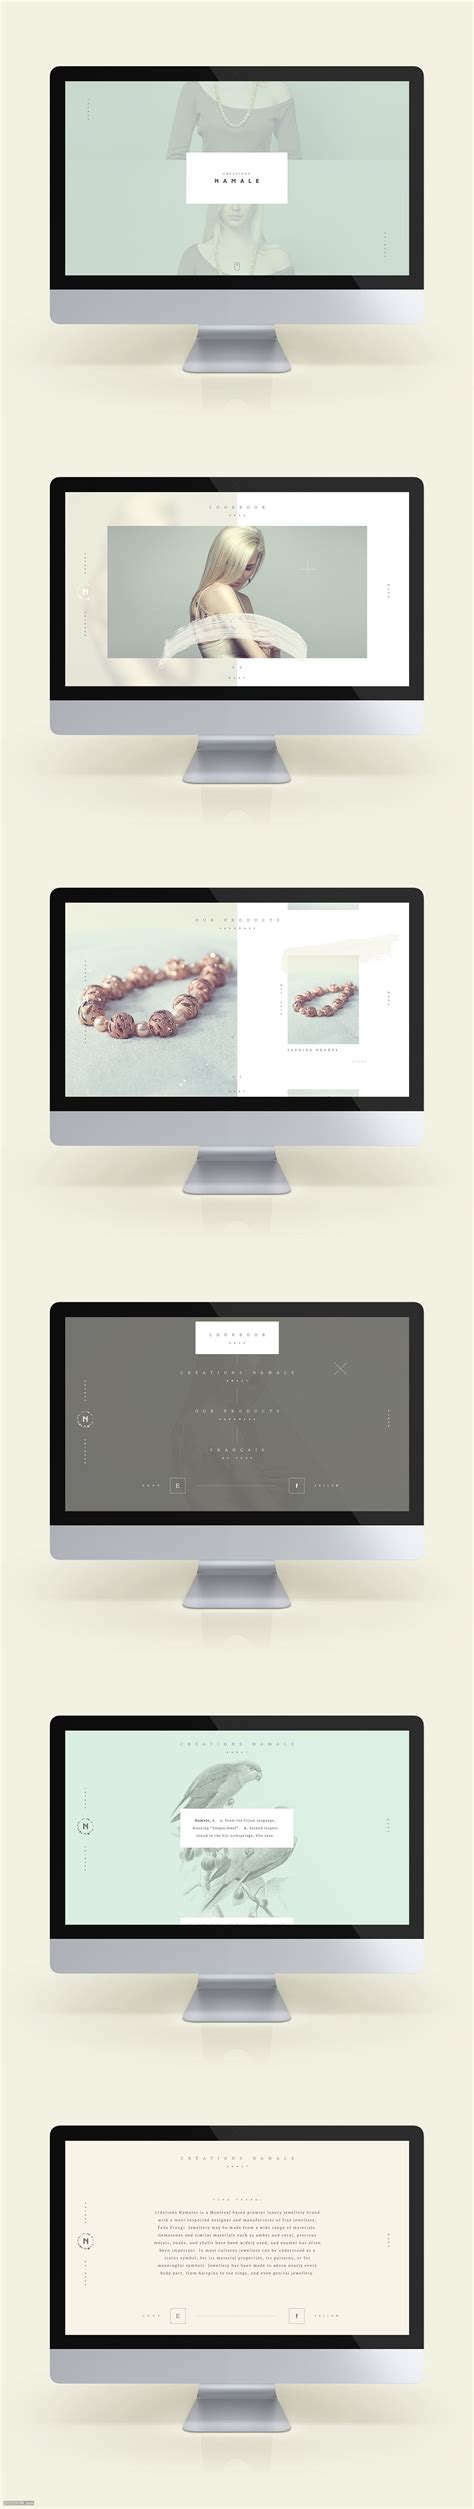 Créations Namale品牌宝石网页设计-Louis Paquet [21P]